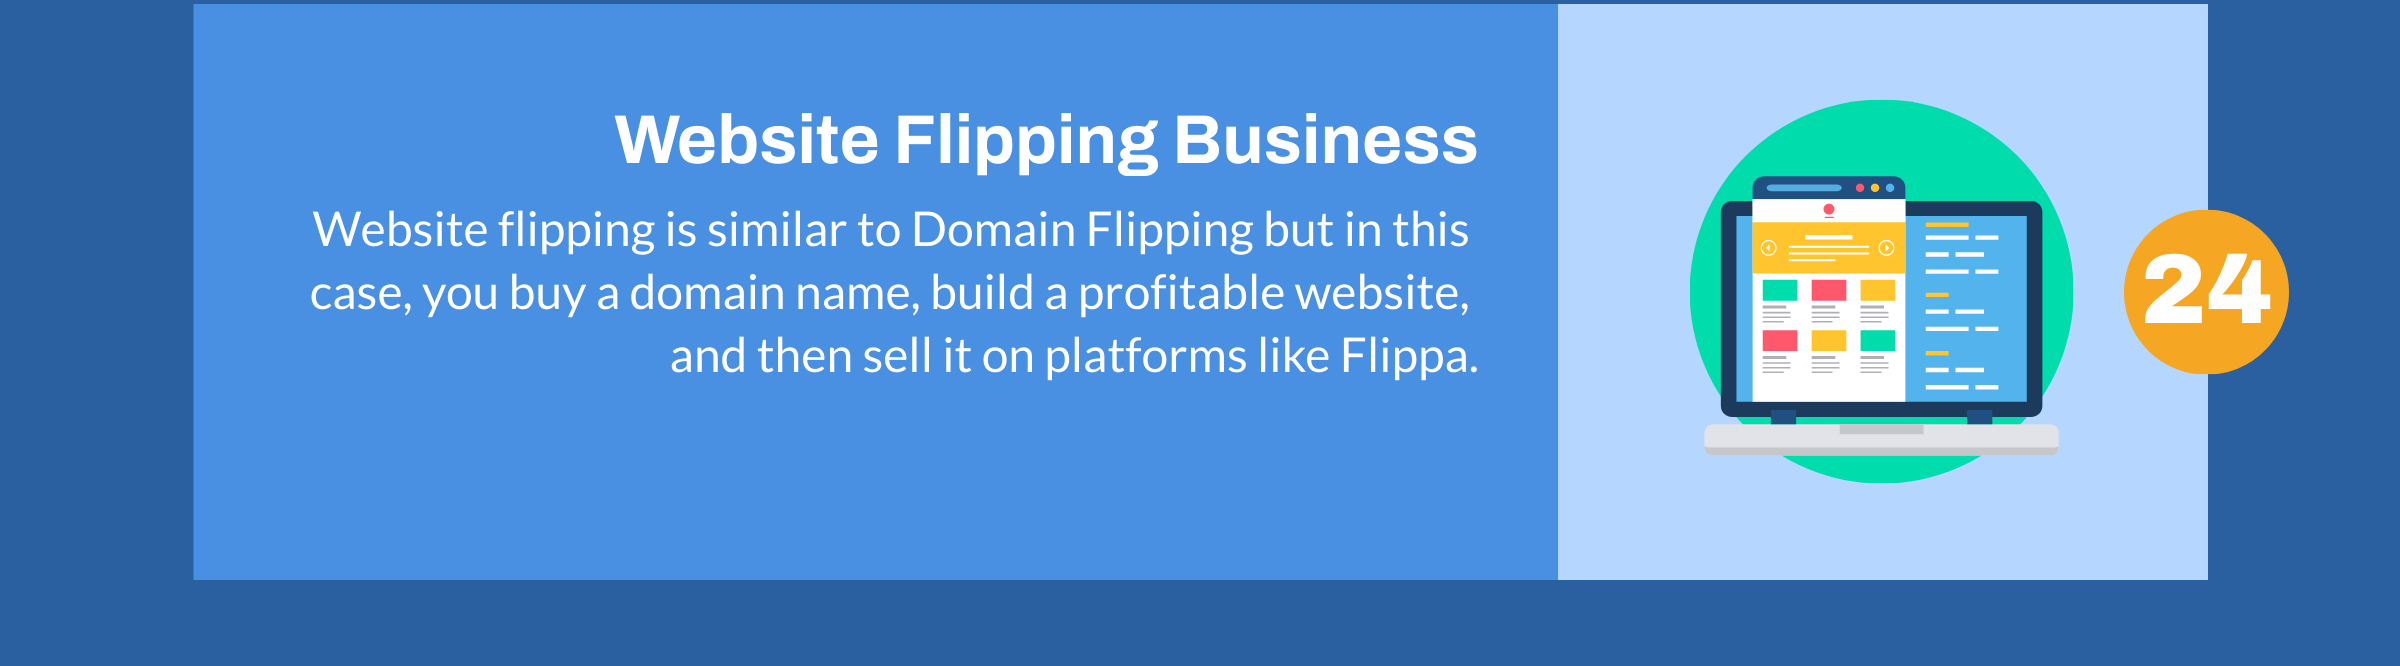 Website Flipping Business